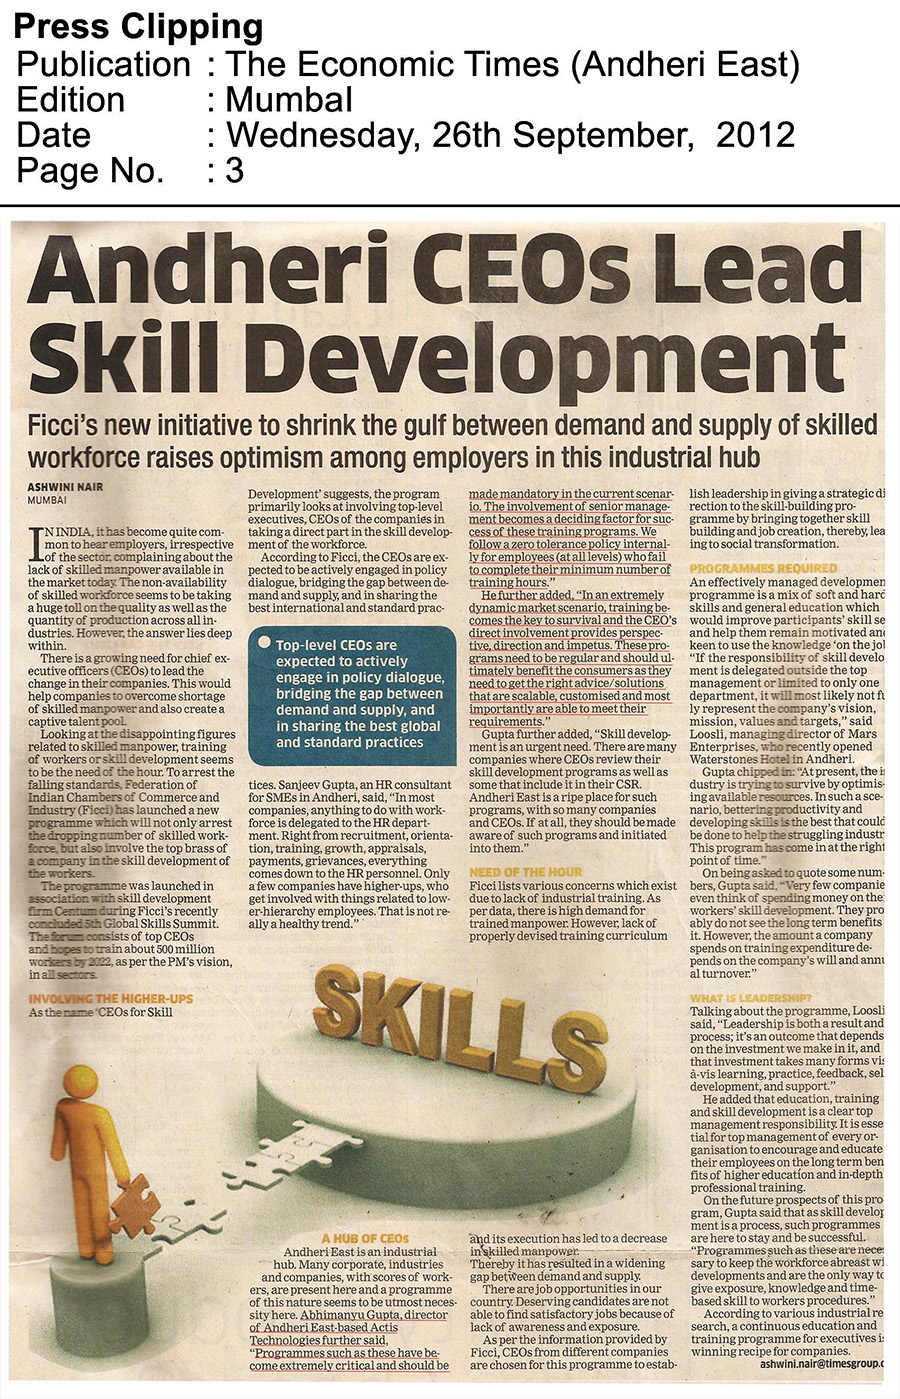 Andheri CEOs lead skill development